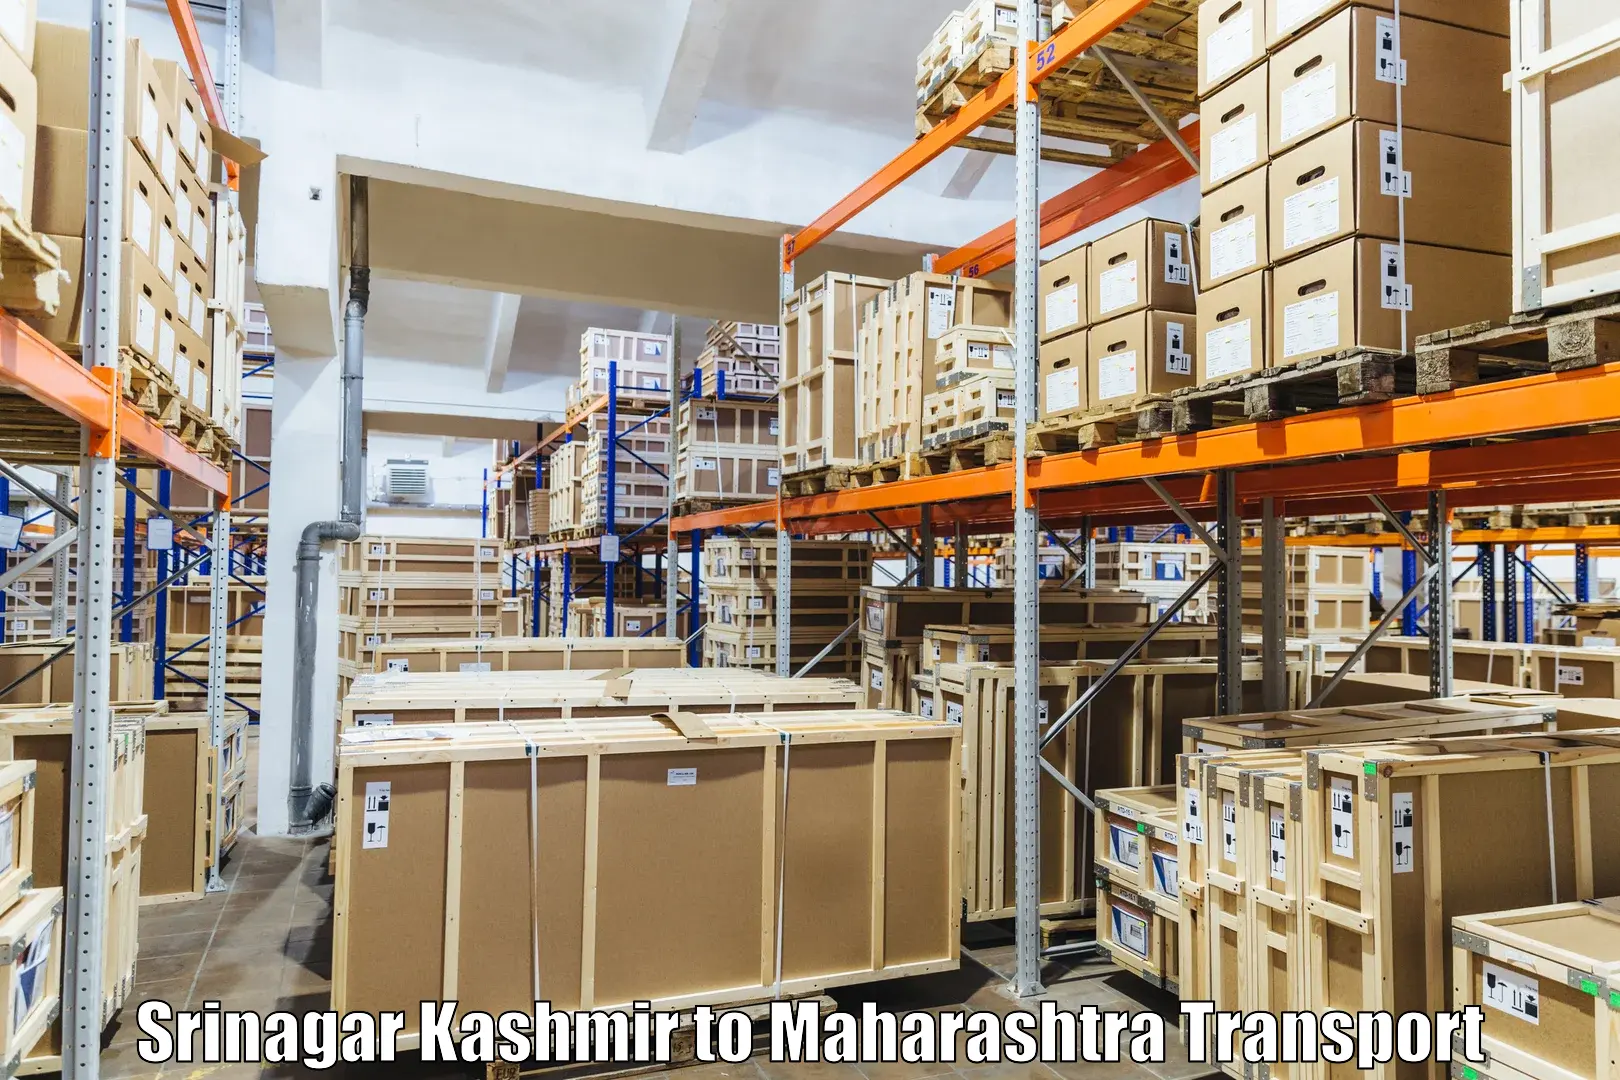 Truck transport companies in India Srinagar Kashmir to Alibag